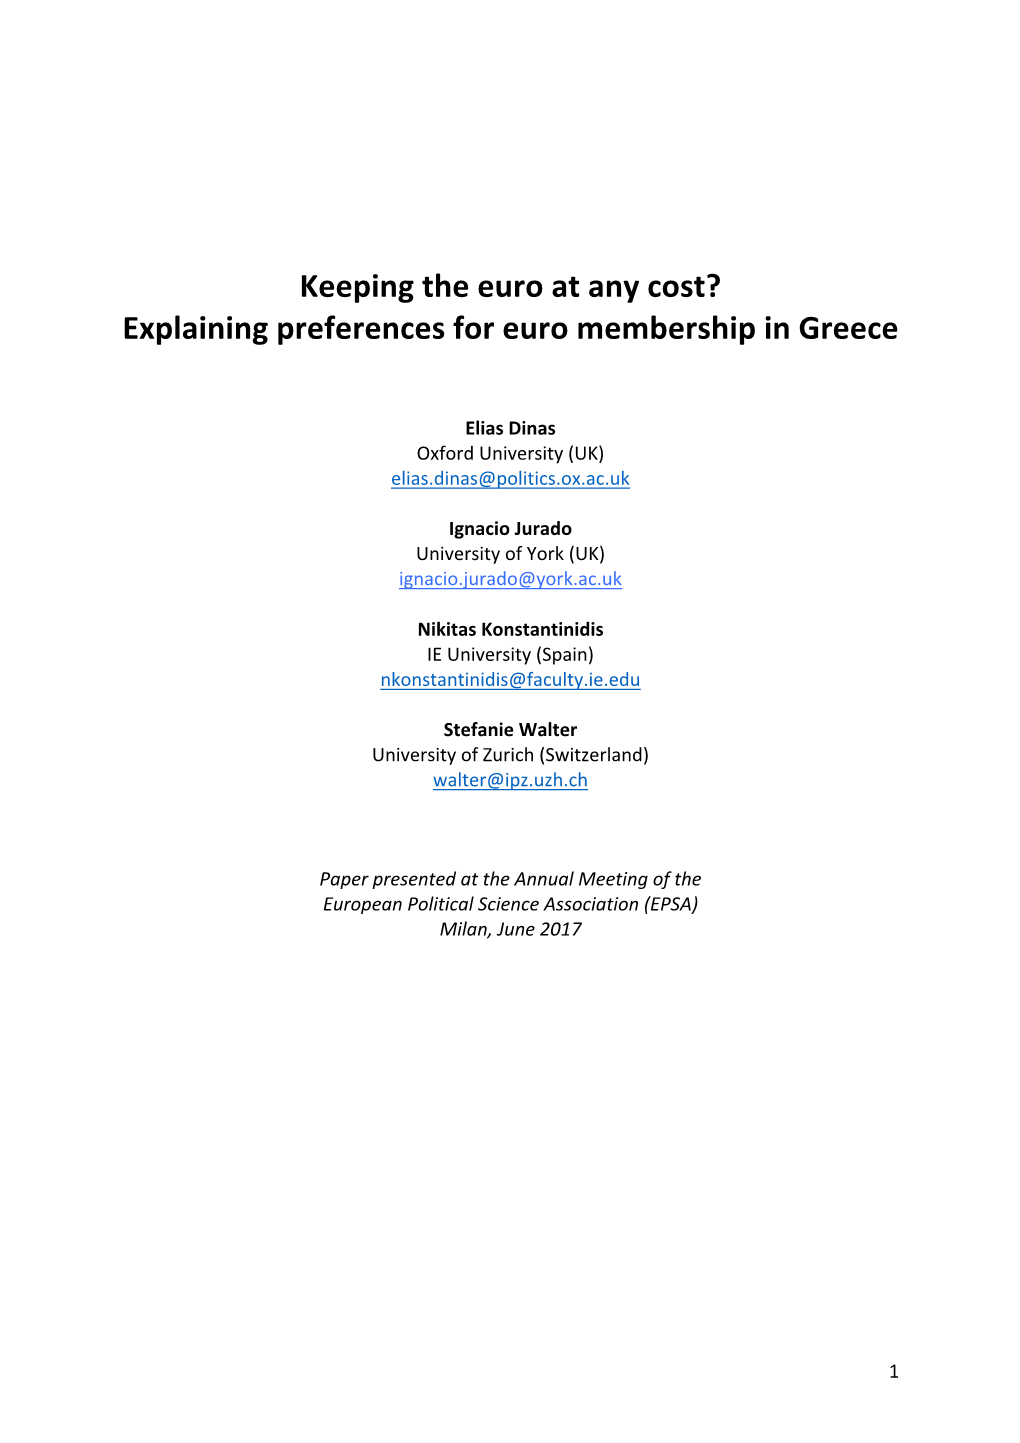 Explaining Preferences for Euro Membership in Greece